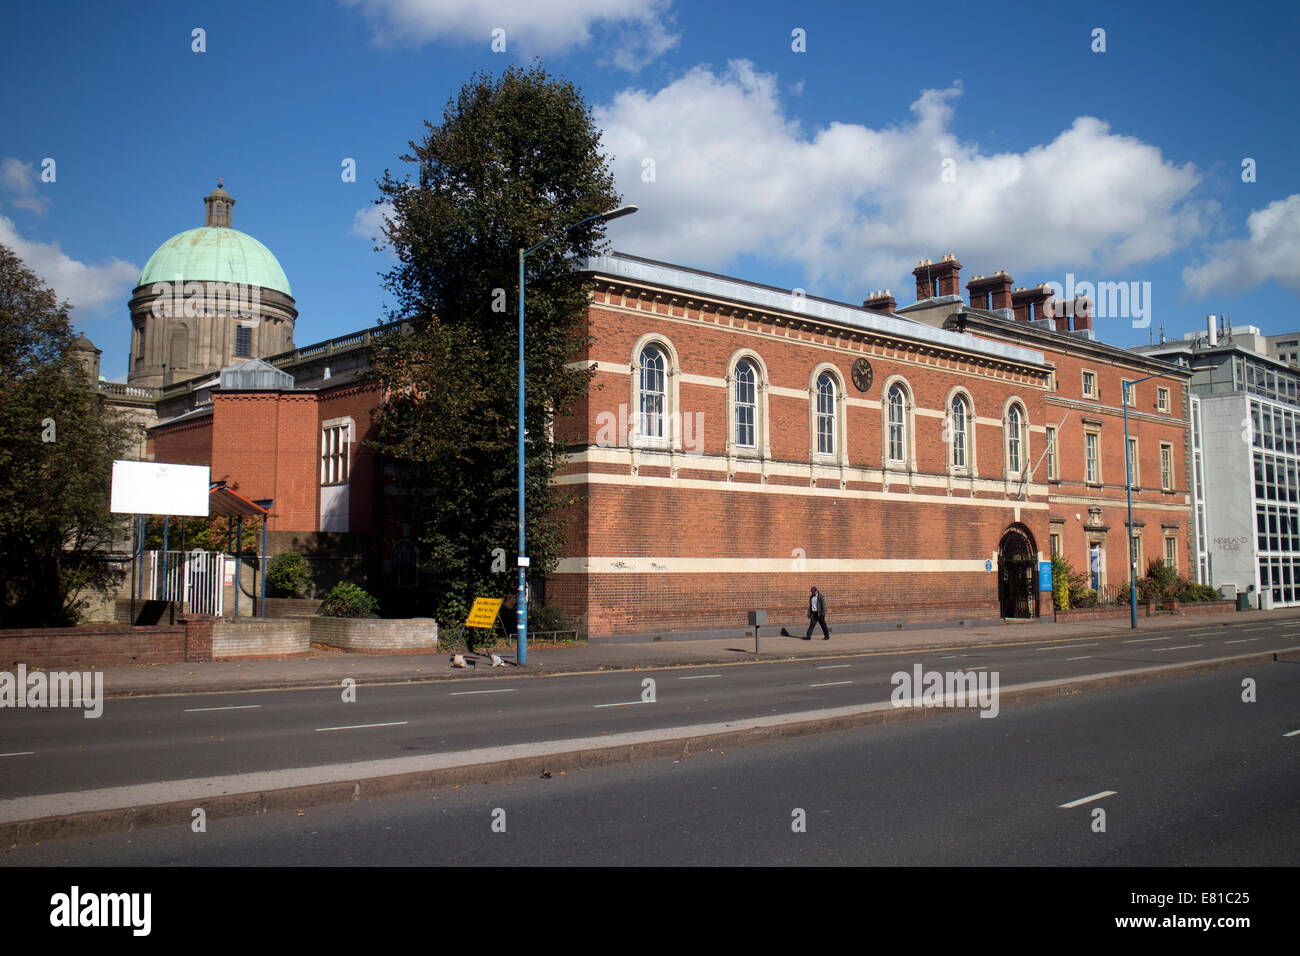 The Oratory, Edgbaston, Birmingham, UK Stock Photo